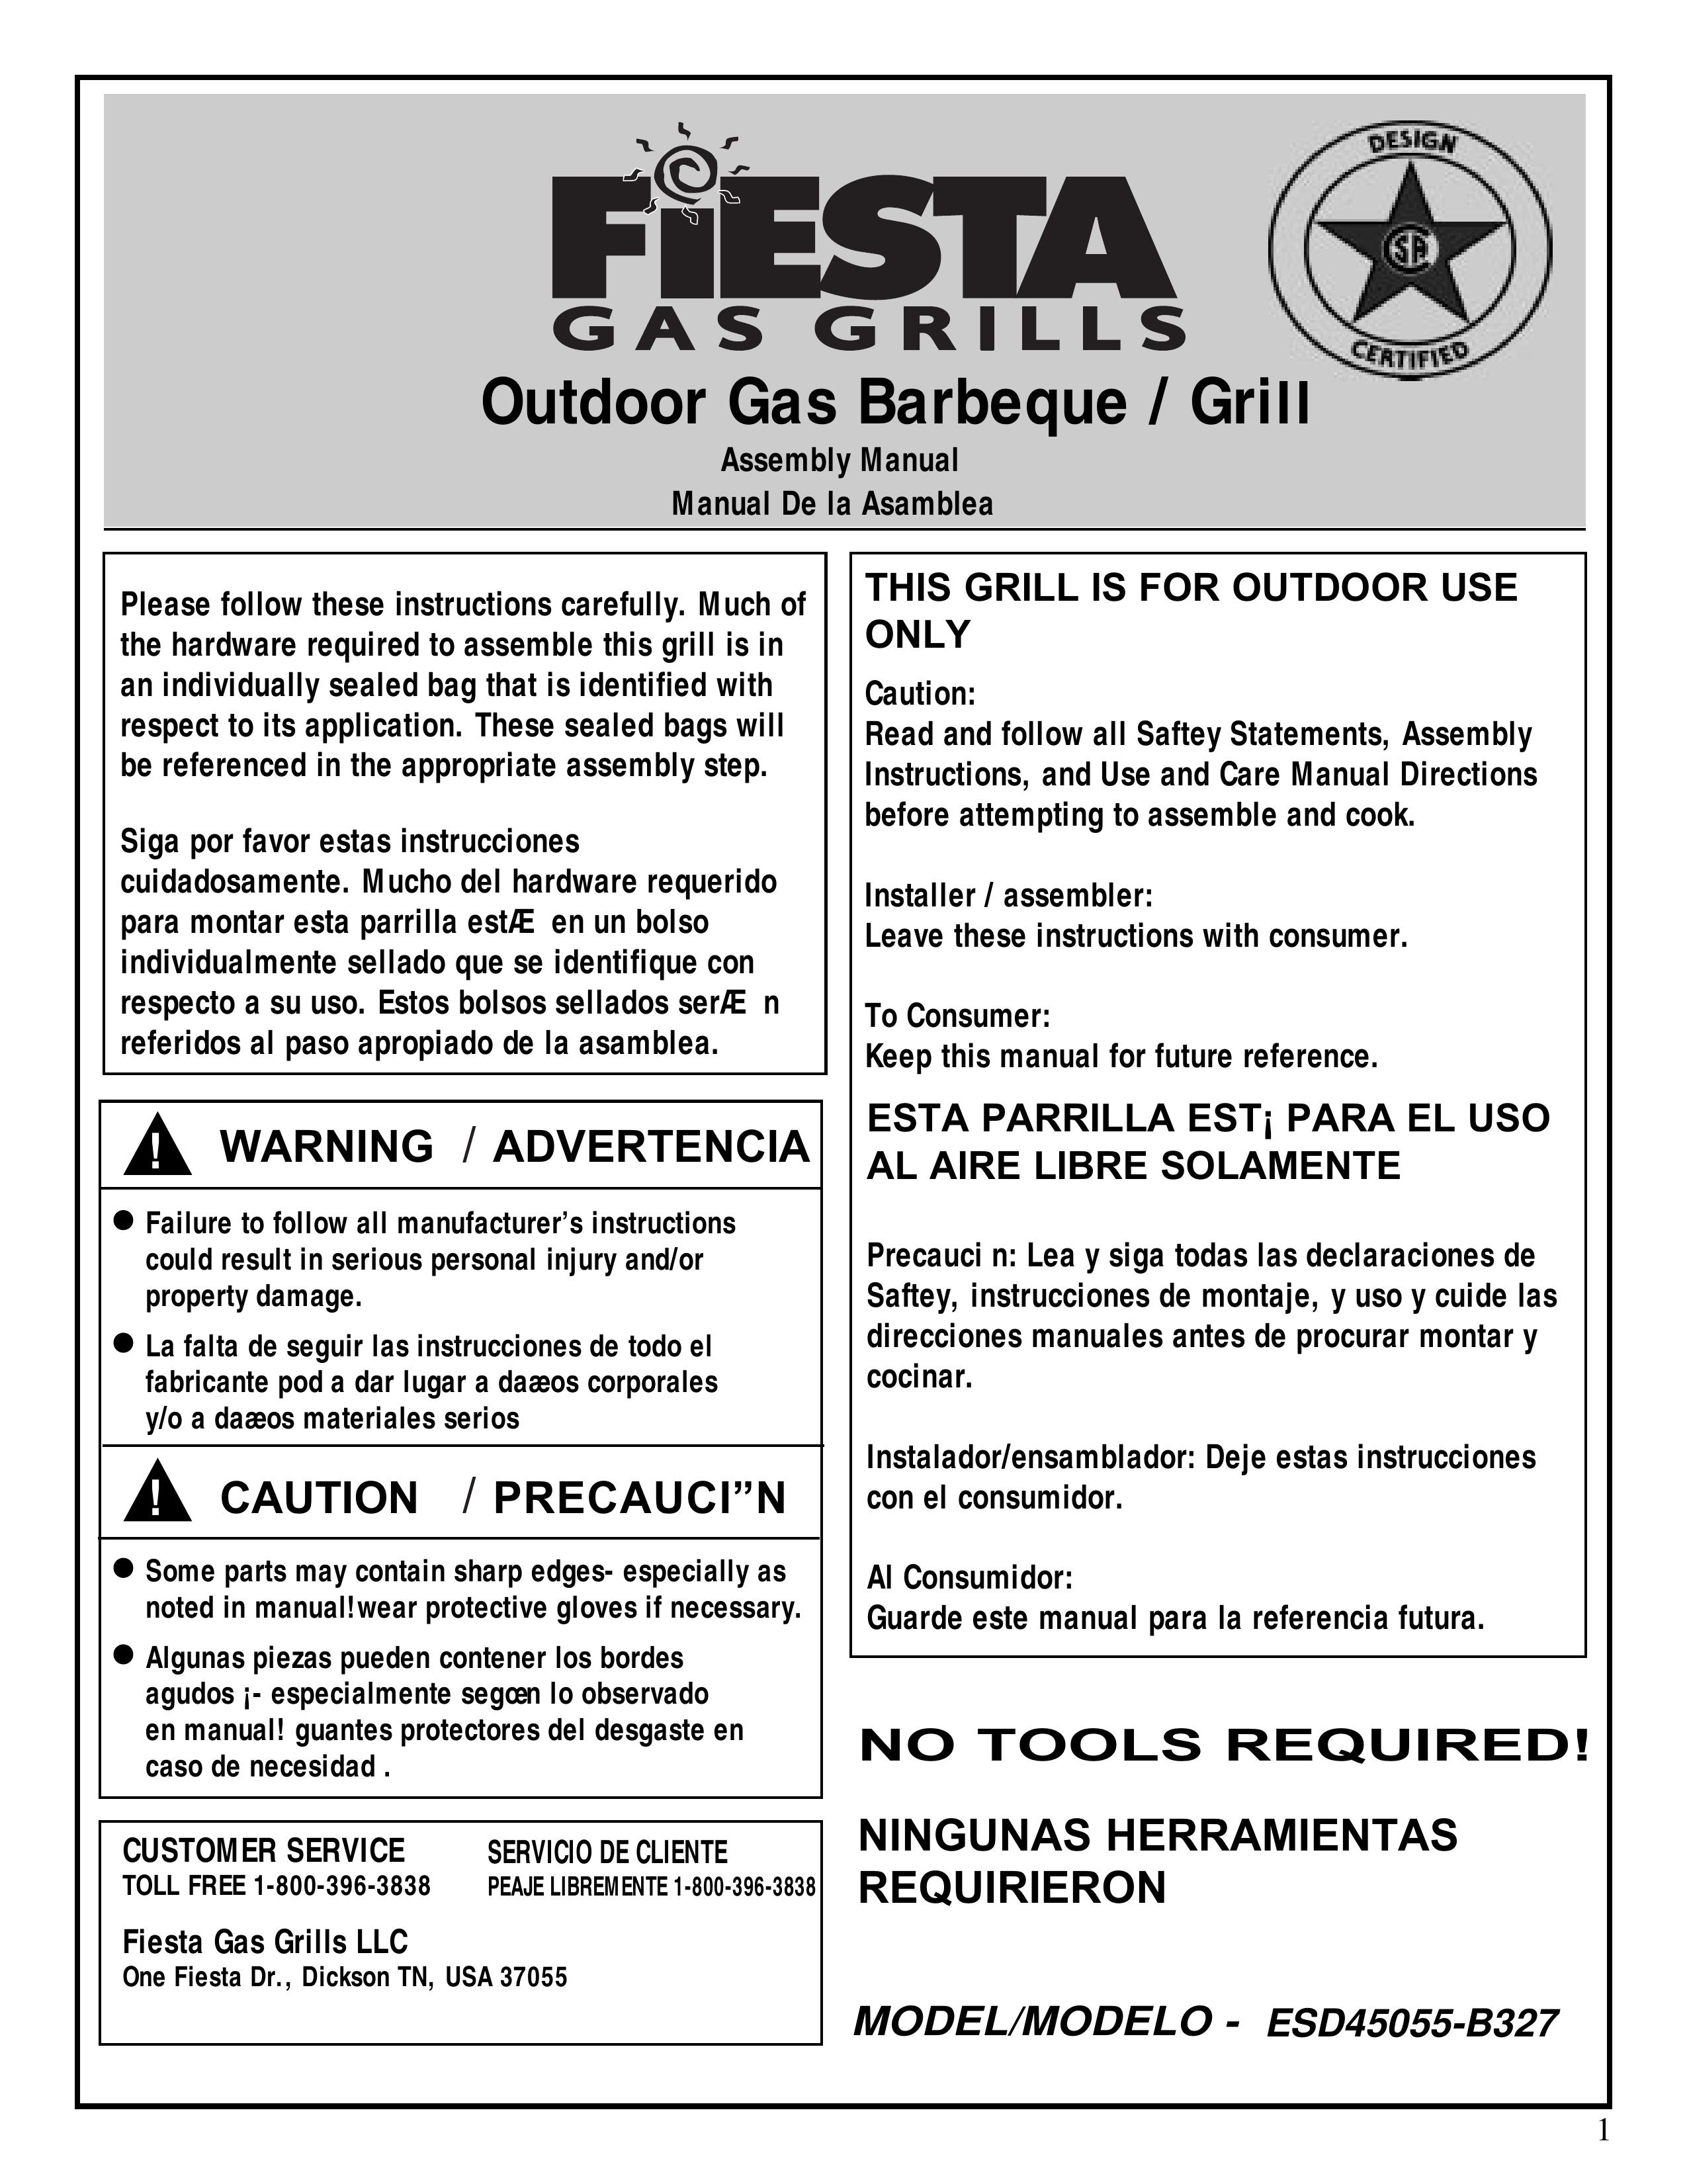 Fiesta ESD45055-B327 Gas Grill User Manual